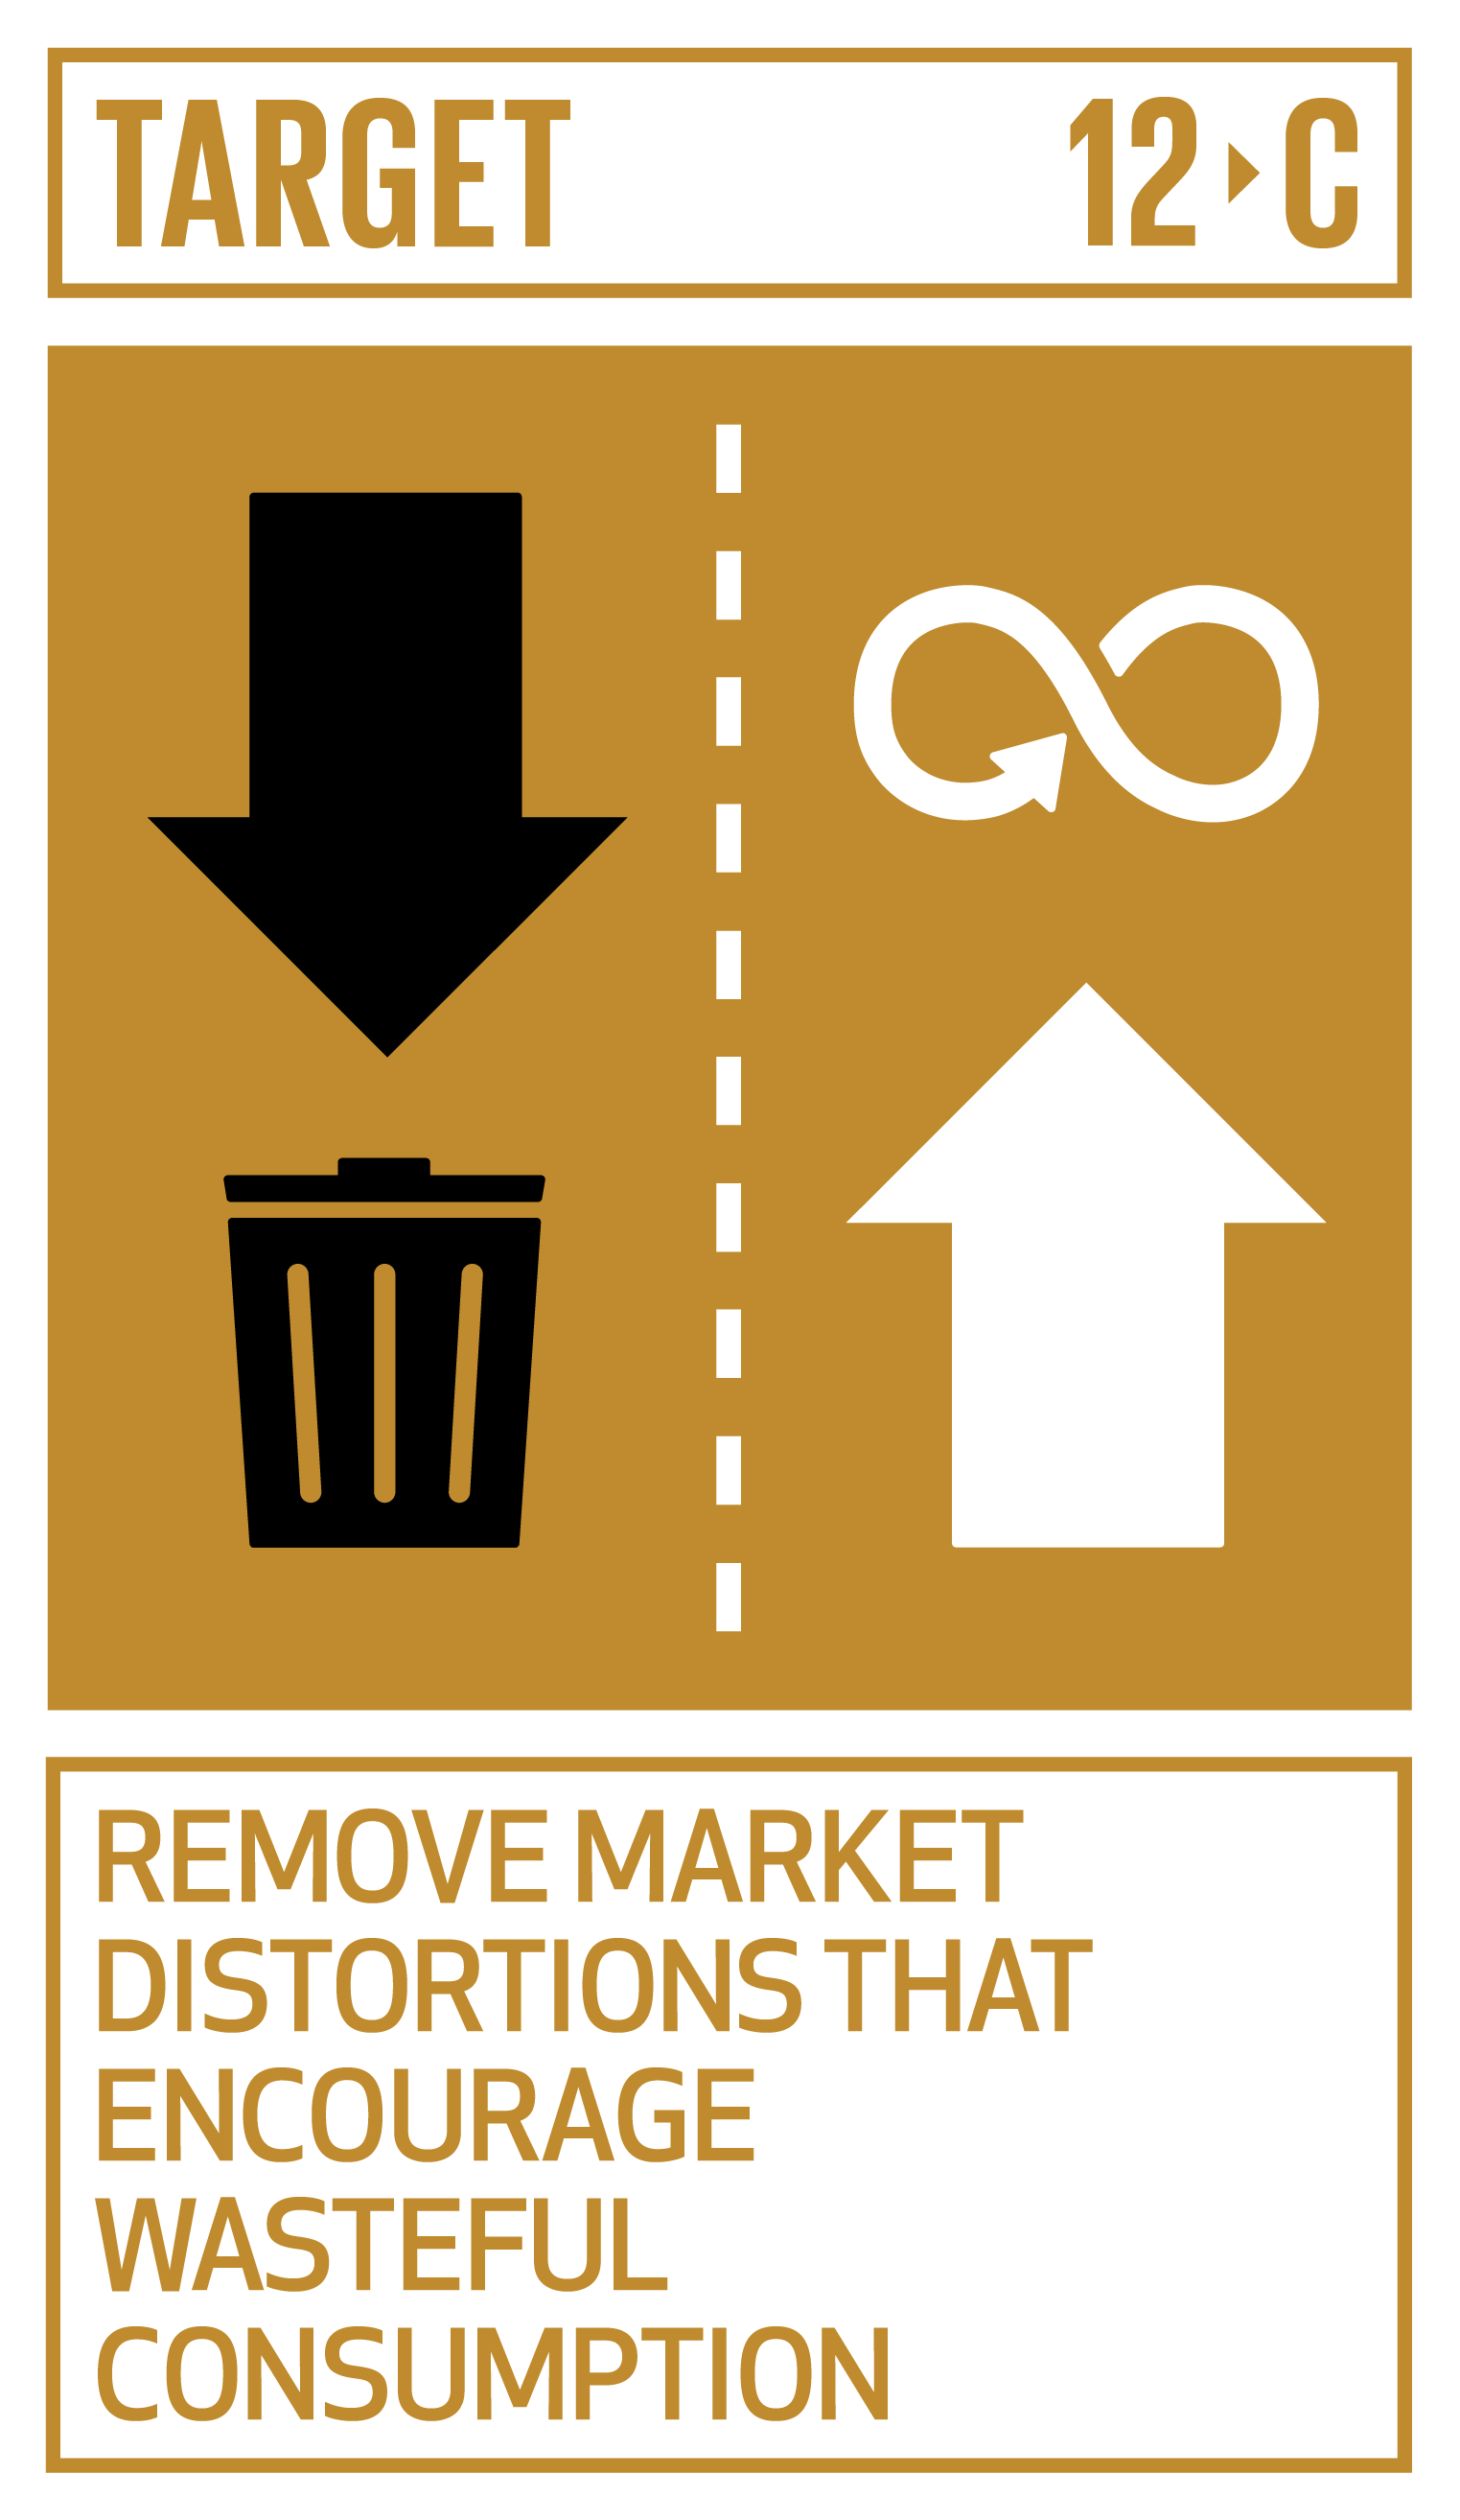 Goal,target,永續發展目標SDGs12, 目標12.C消除鼓勵浪費性消費的市場扭曲